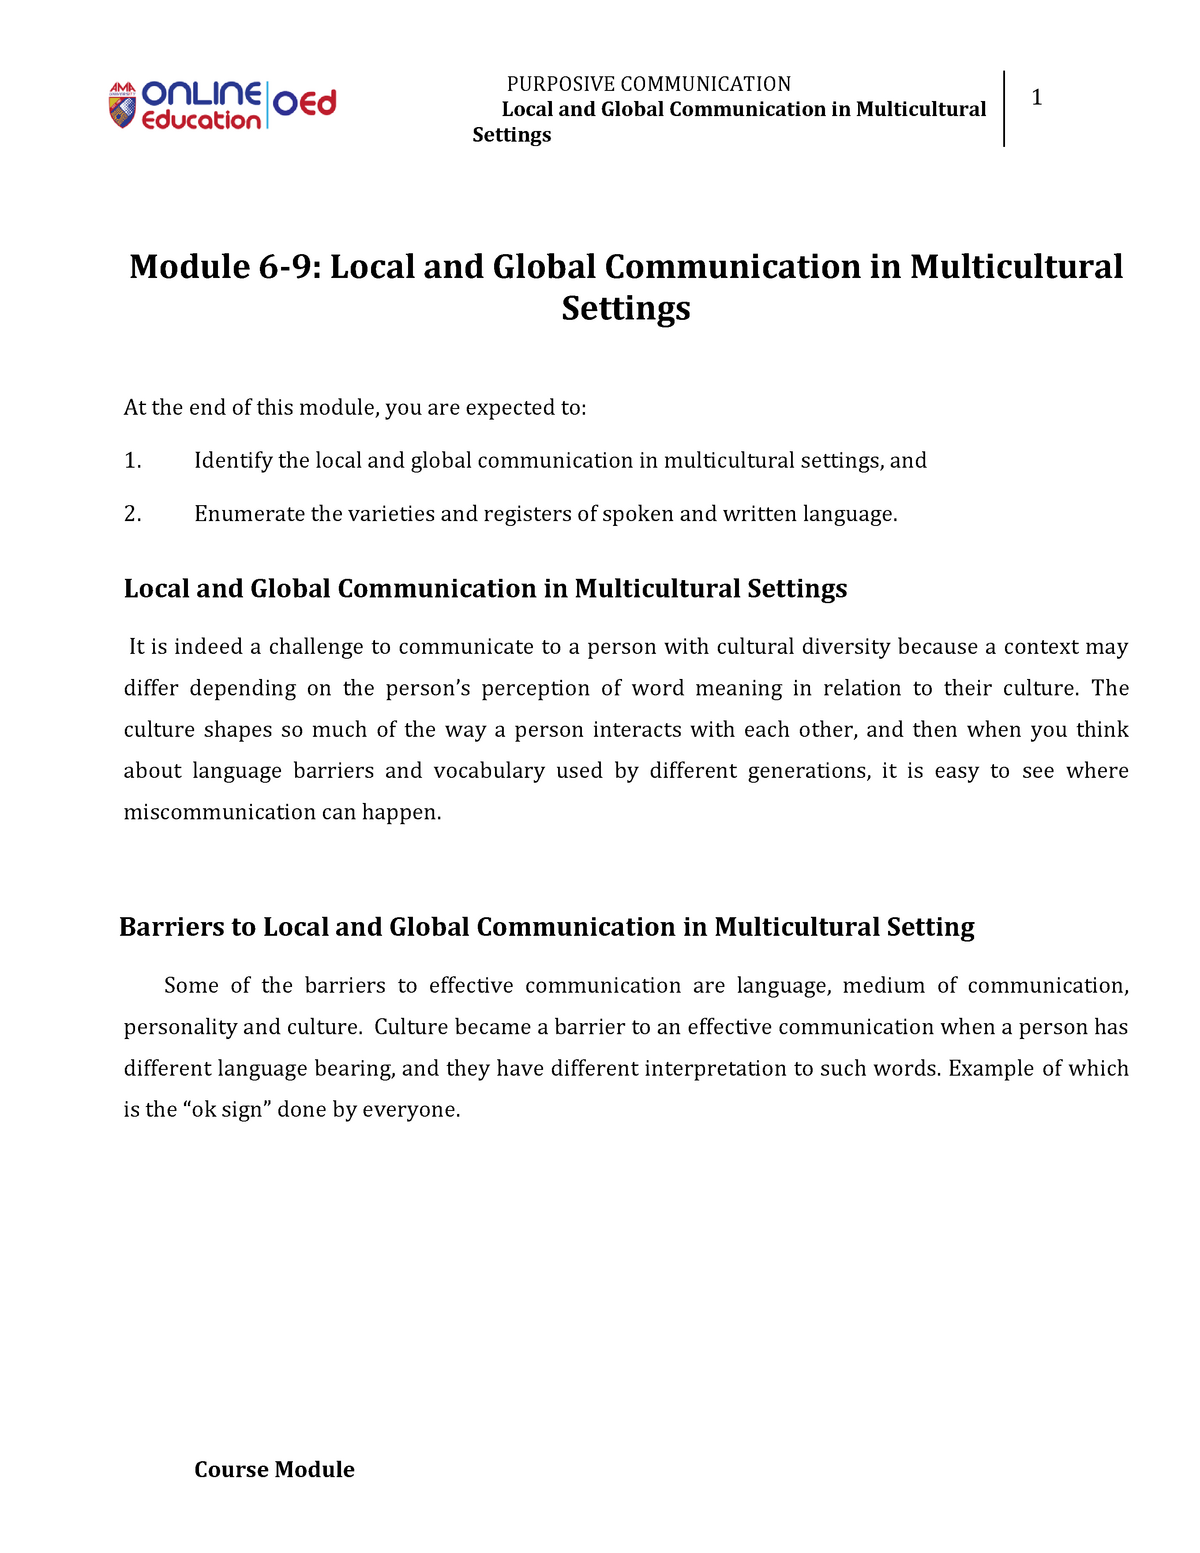 assignment #4 (week 6) global communication paper